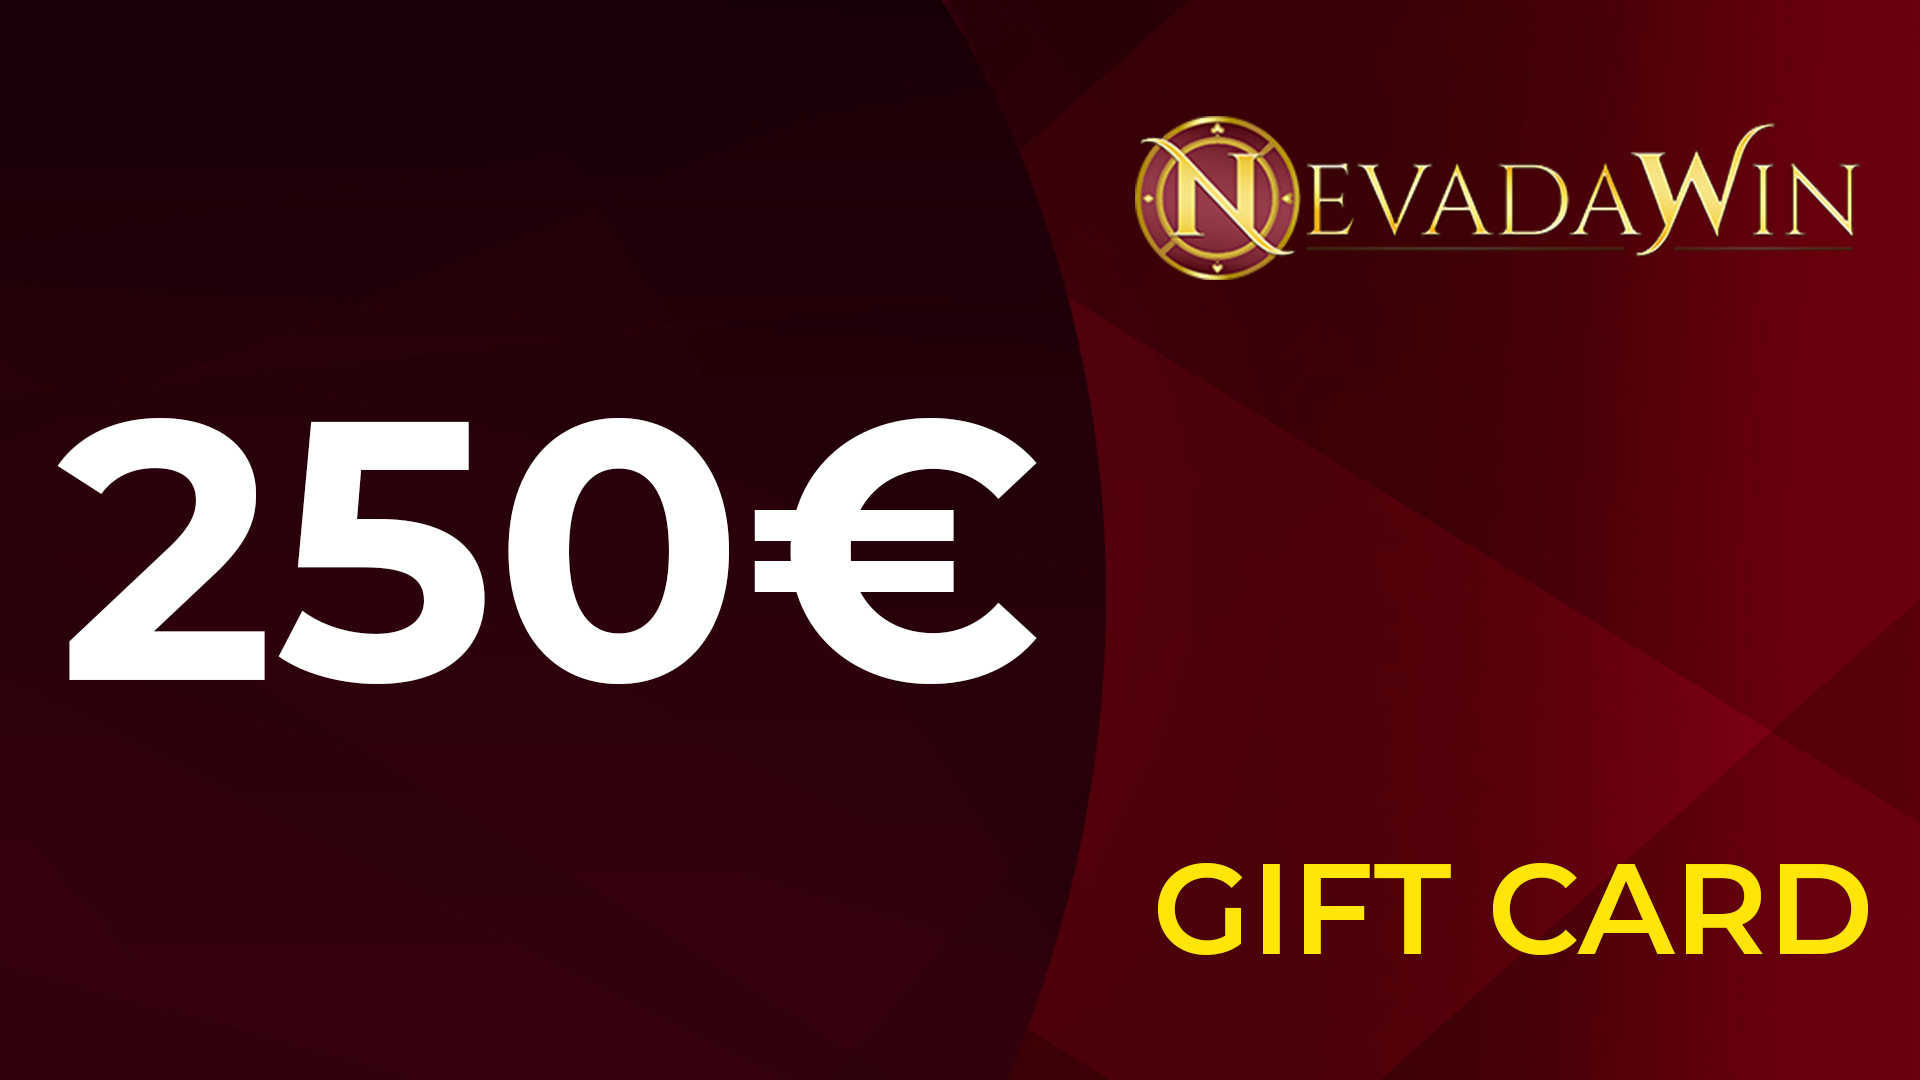 NevadaWin €250 Giftcard